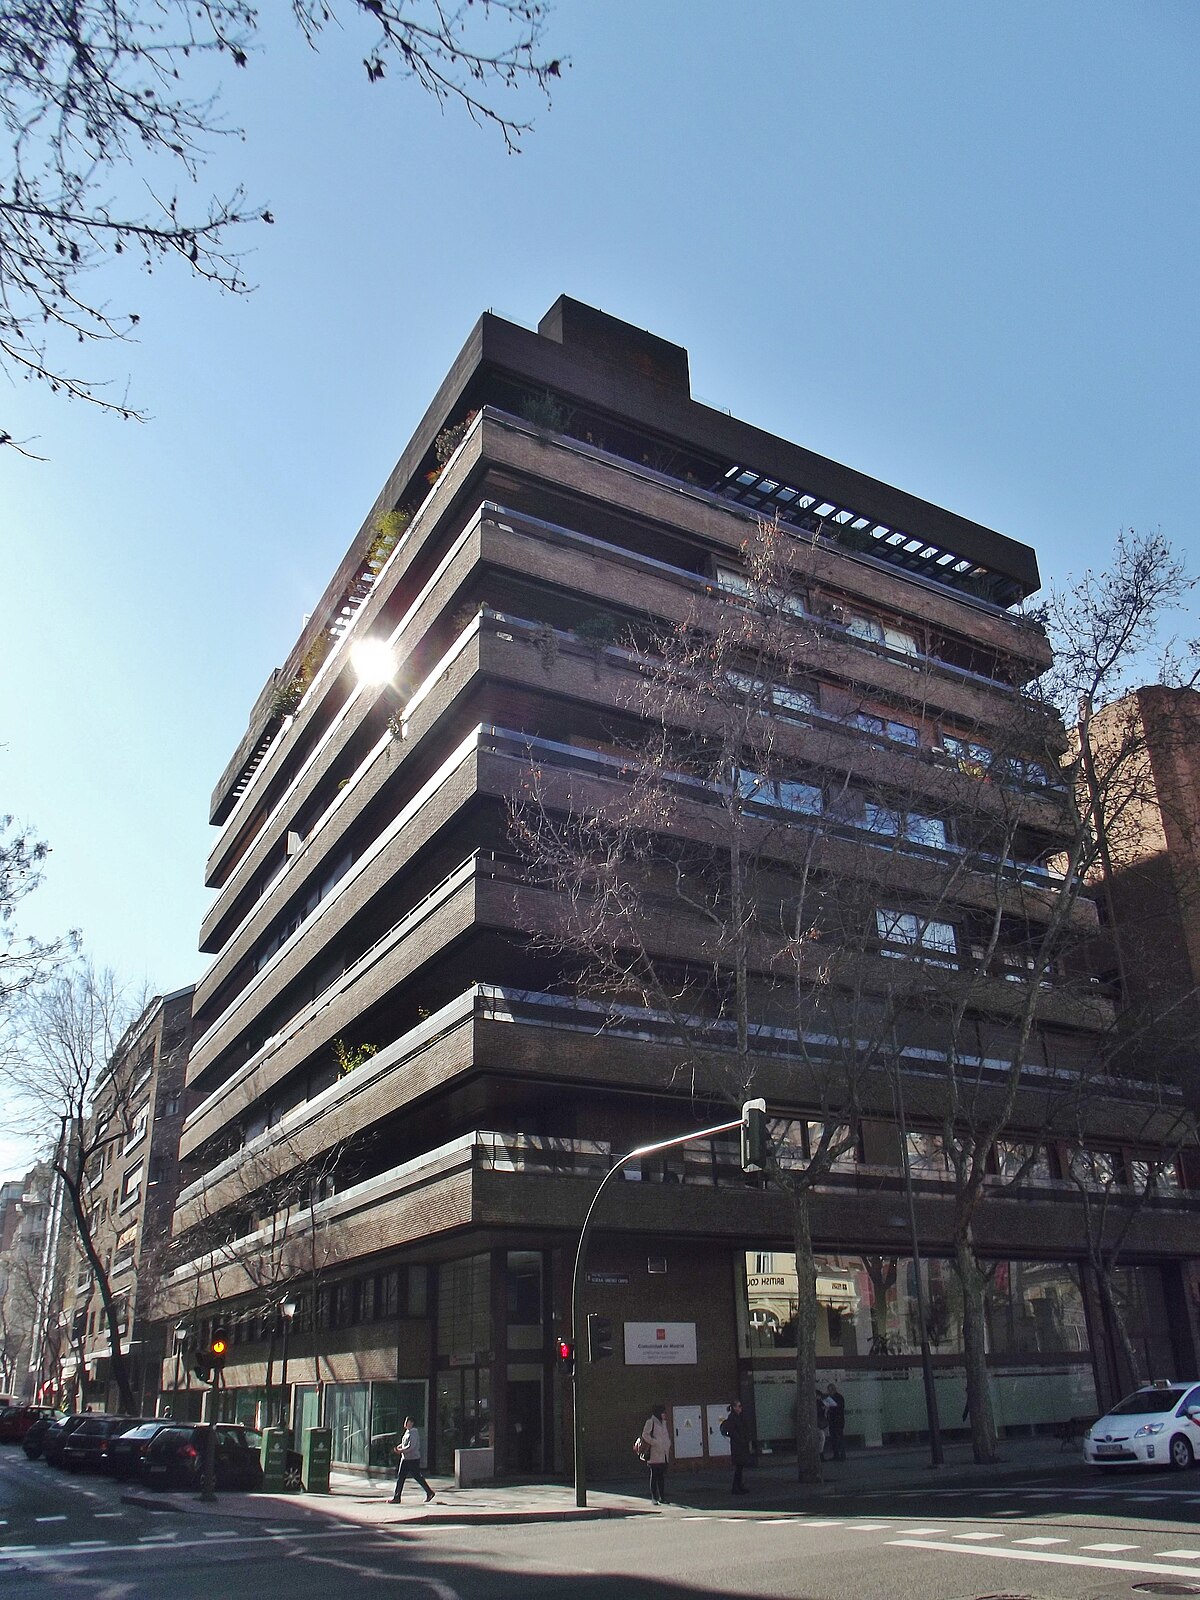 Paseo del General Martínez Campos 34 housing, Madrid - Wikidata